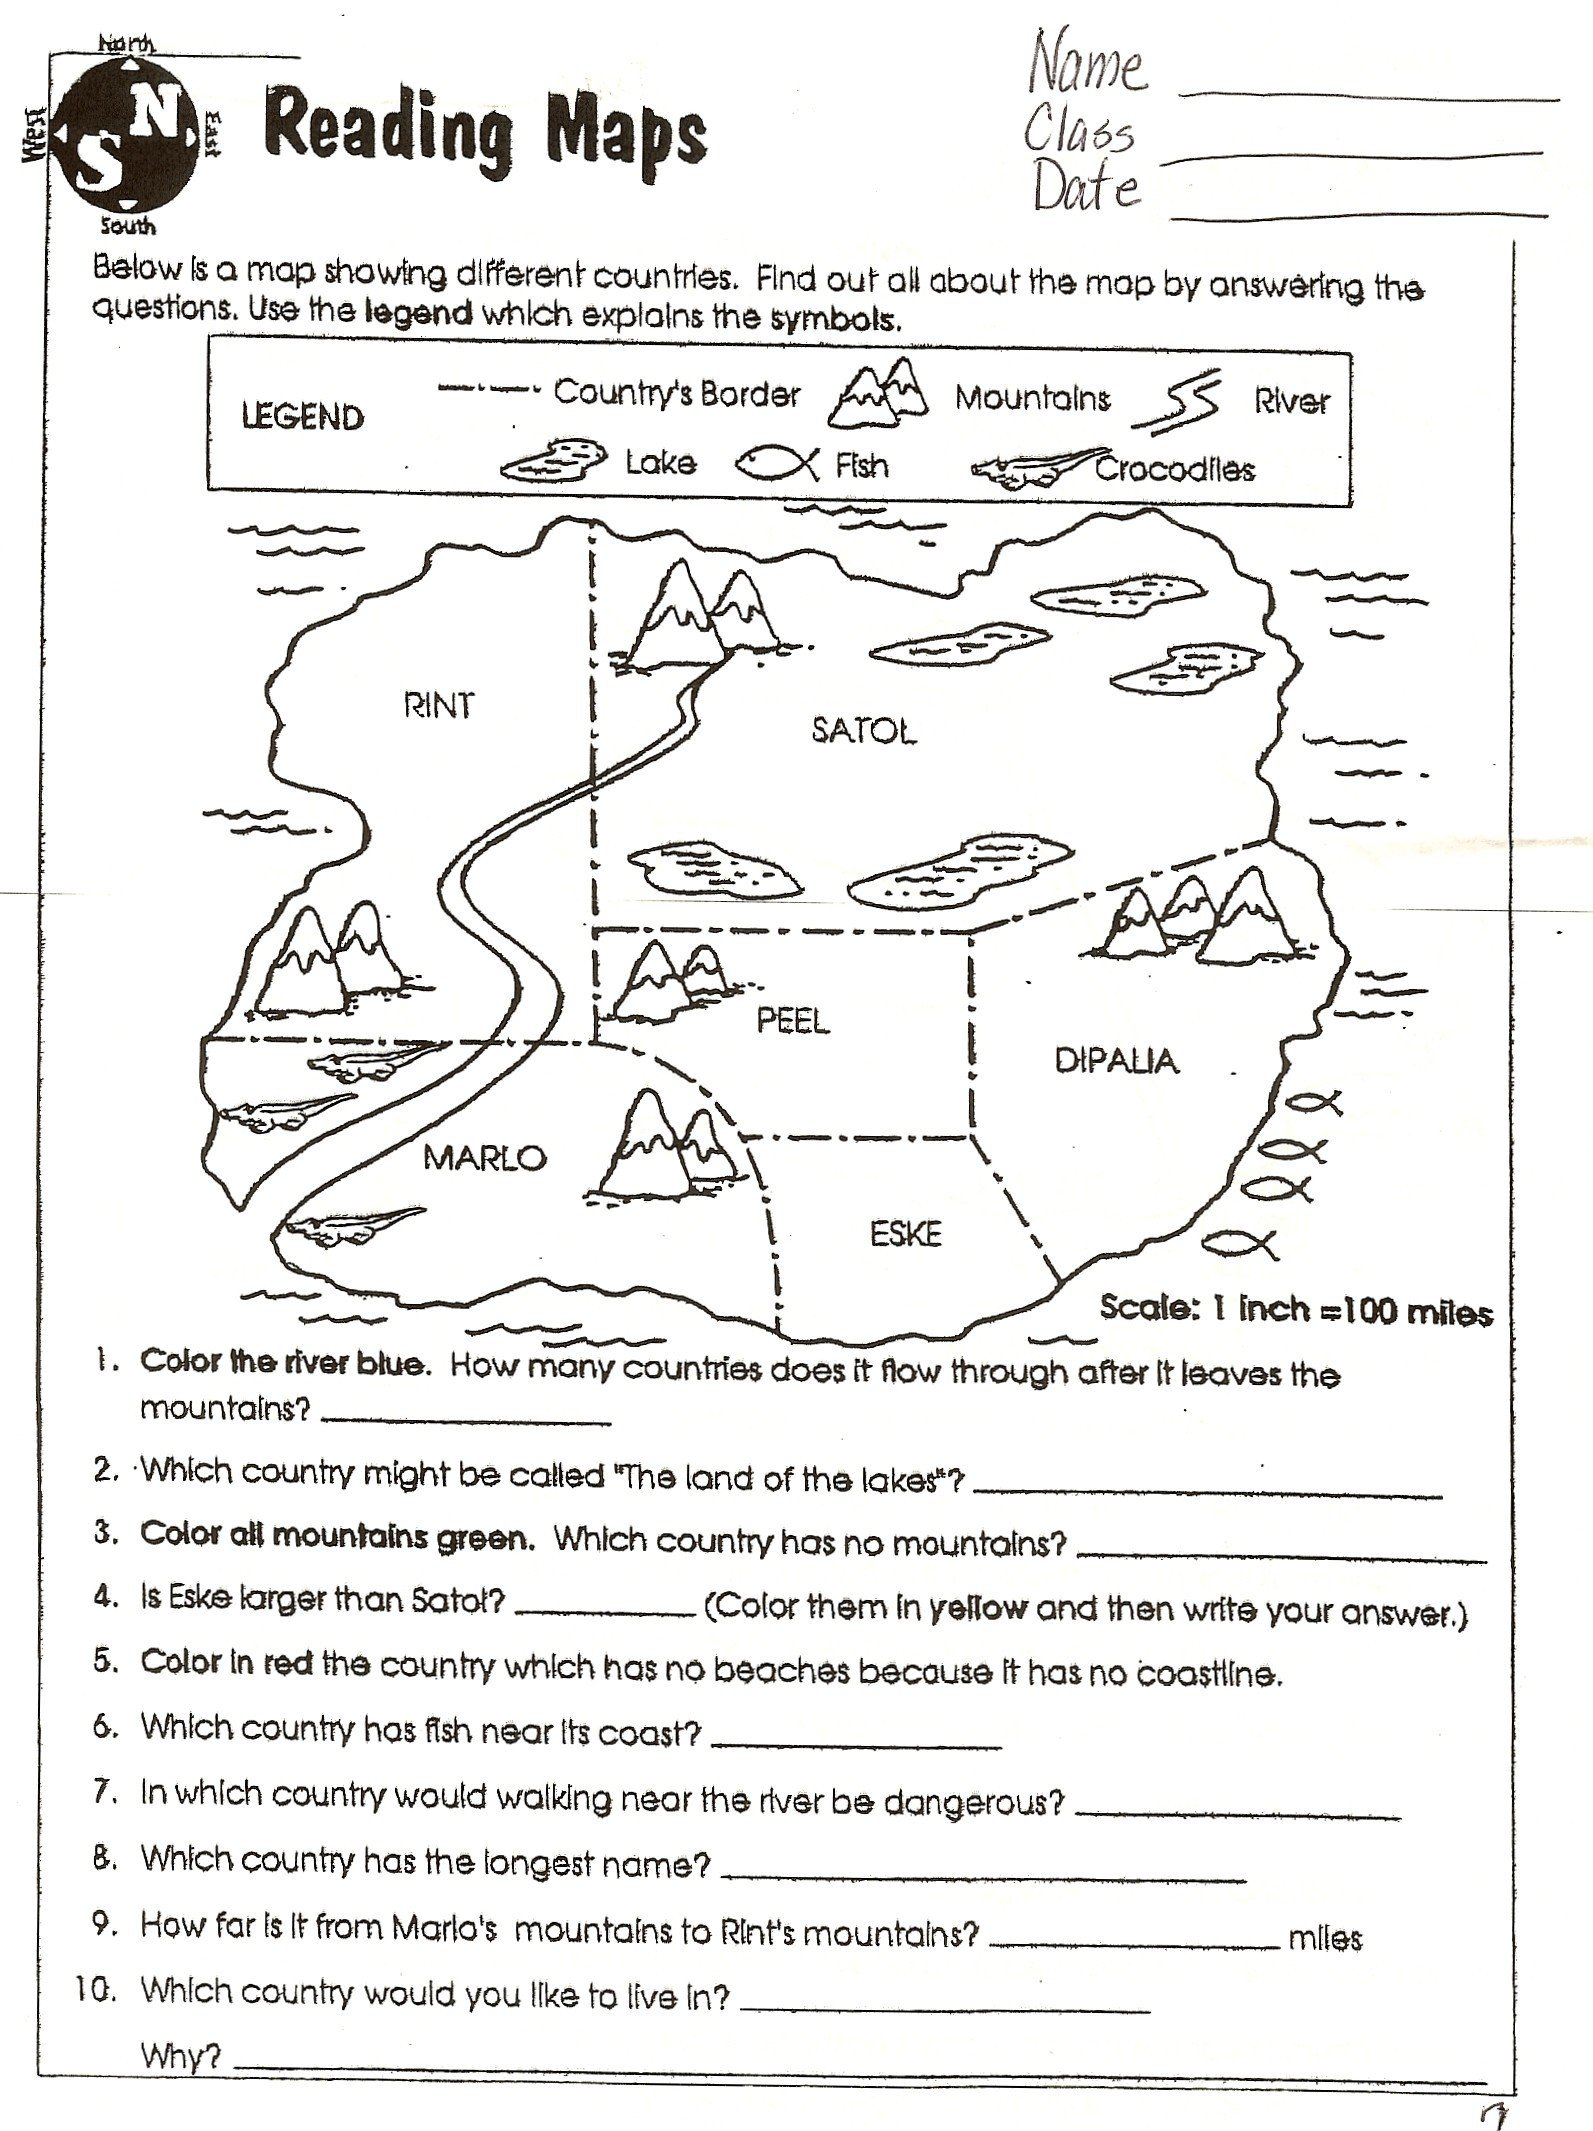 Reading A Map Worksheet Division Worksheets Georgia Child Support For Reading A Map Worksheet Pdf